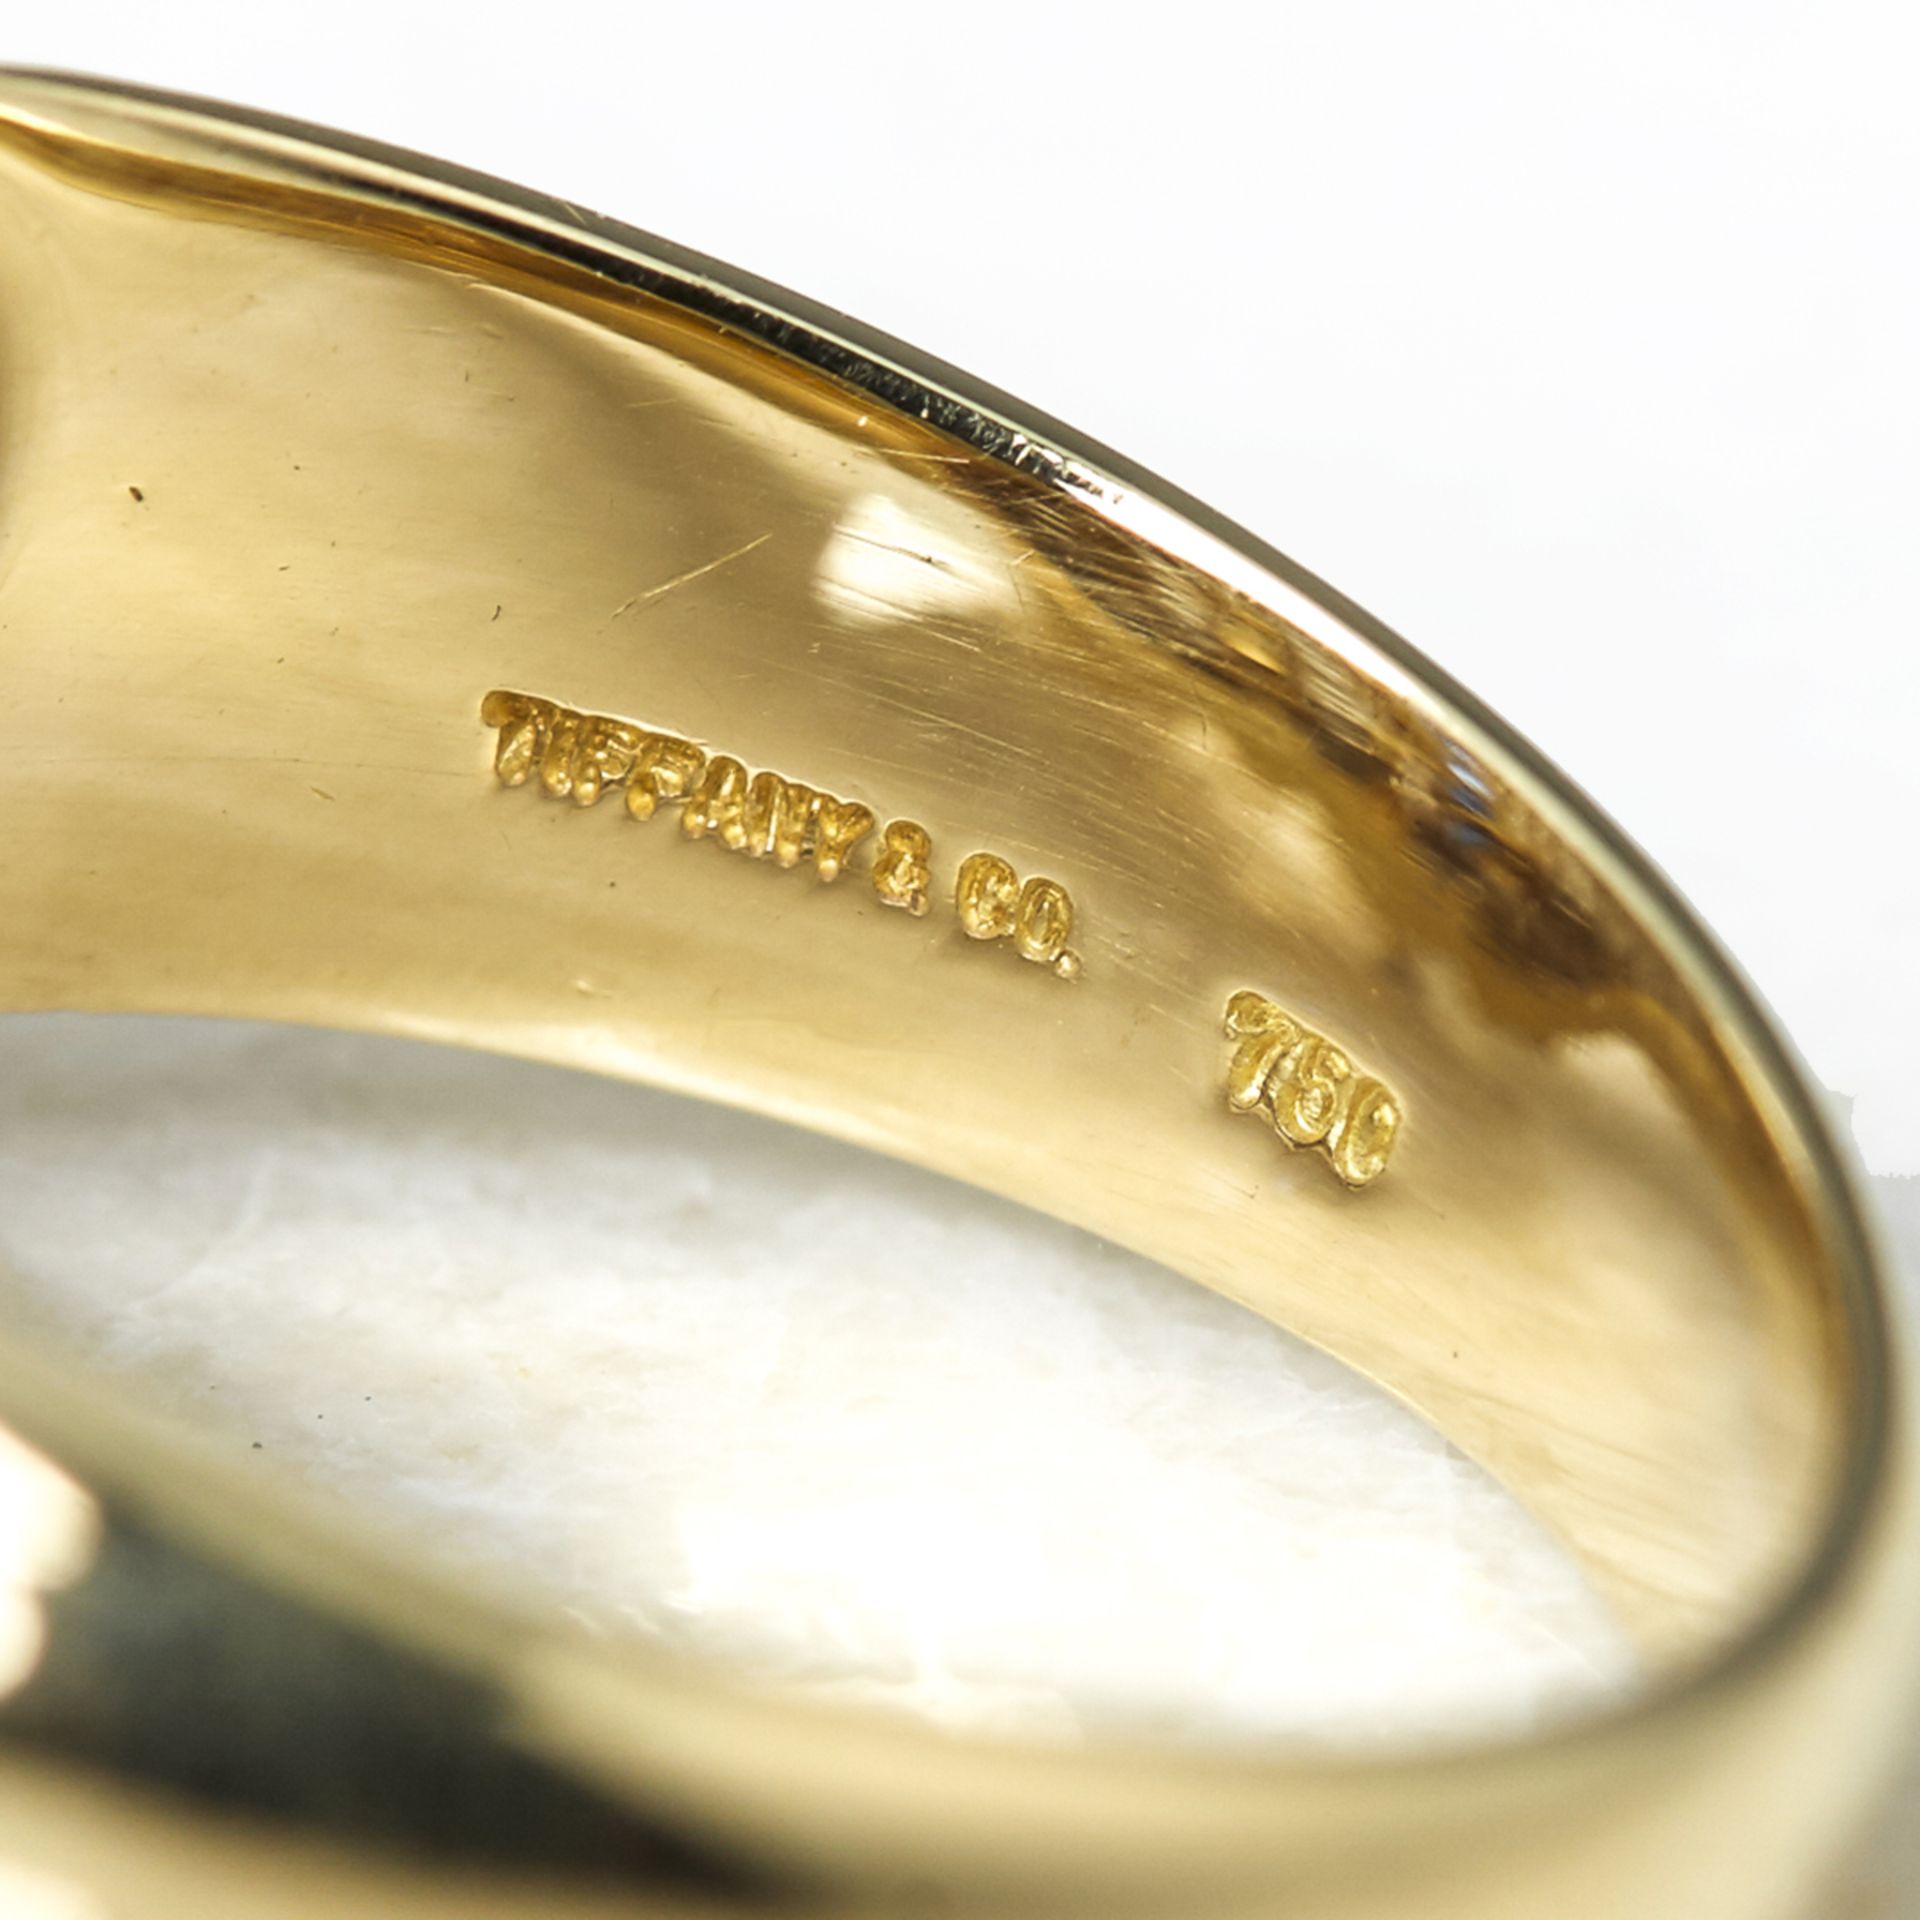 Tiffany & Co., 18k Yellow Gold 0.75ct Sapphire & 1.10ct Diamond Ring - Image 5 of 5